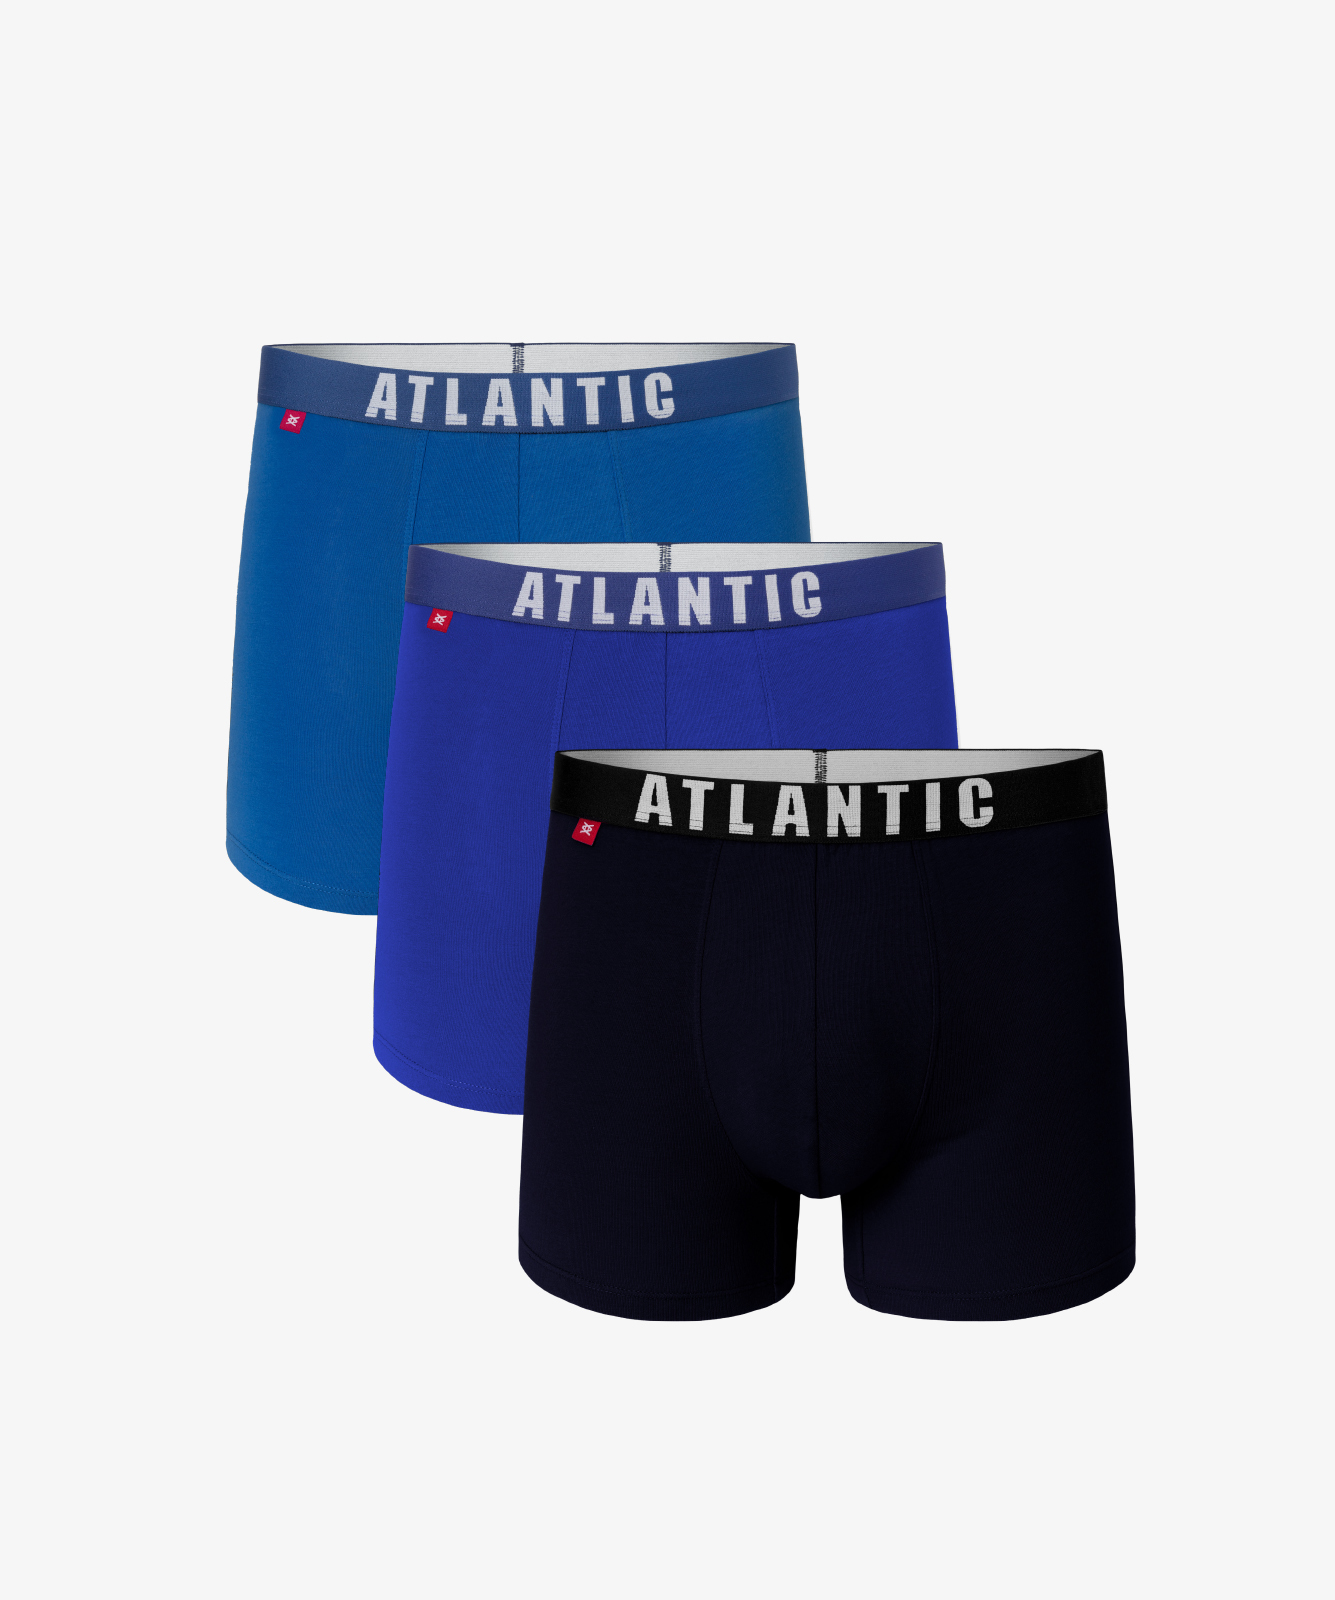 3-PACK Men's boxers ATLANTIC turquoise/blue/navy